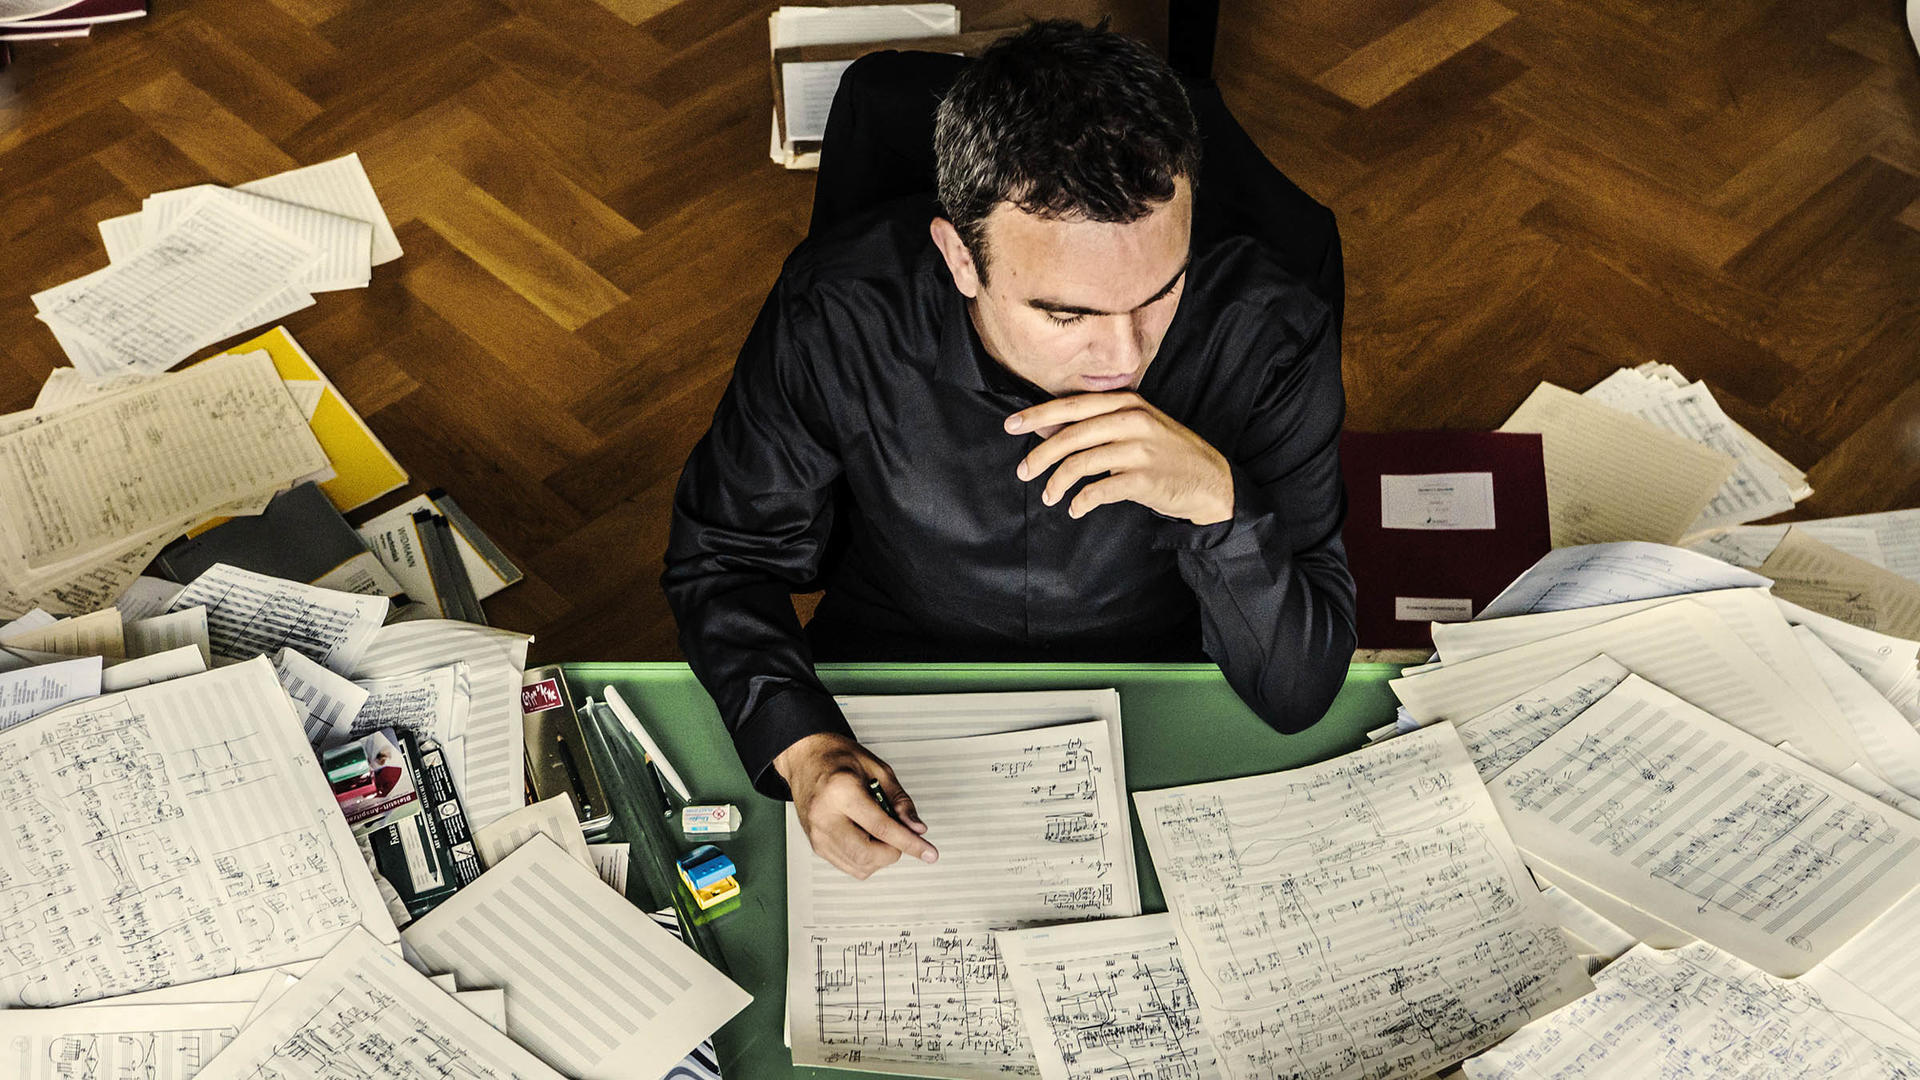 Jörg Widmann at a desk, surrounded by manuscript paper and sheet music